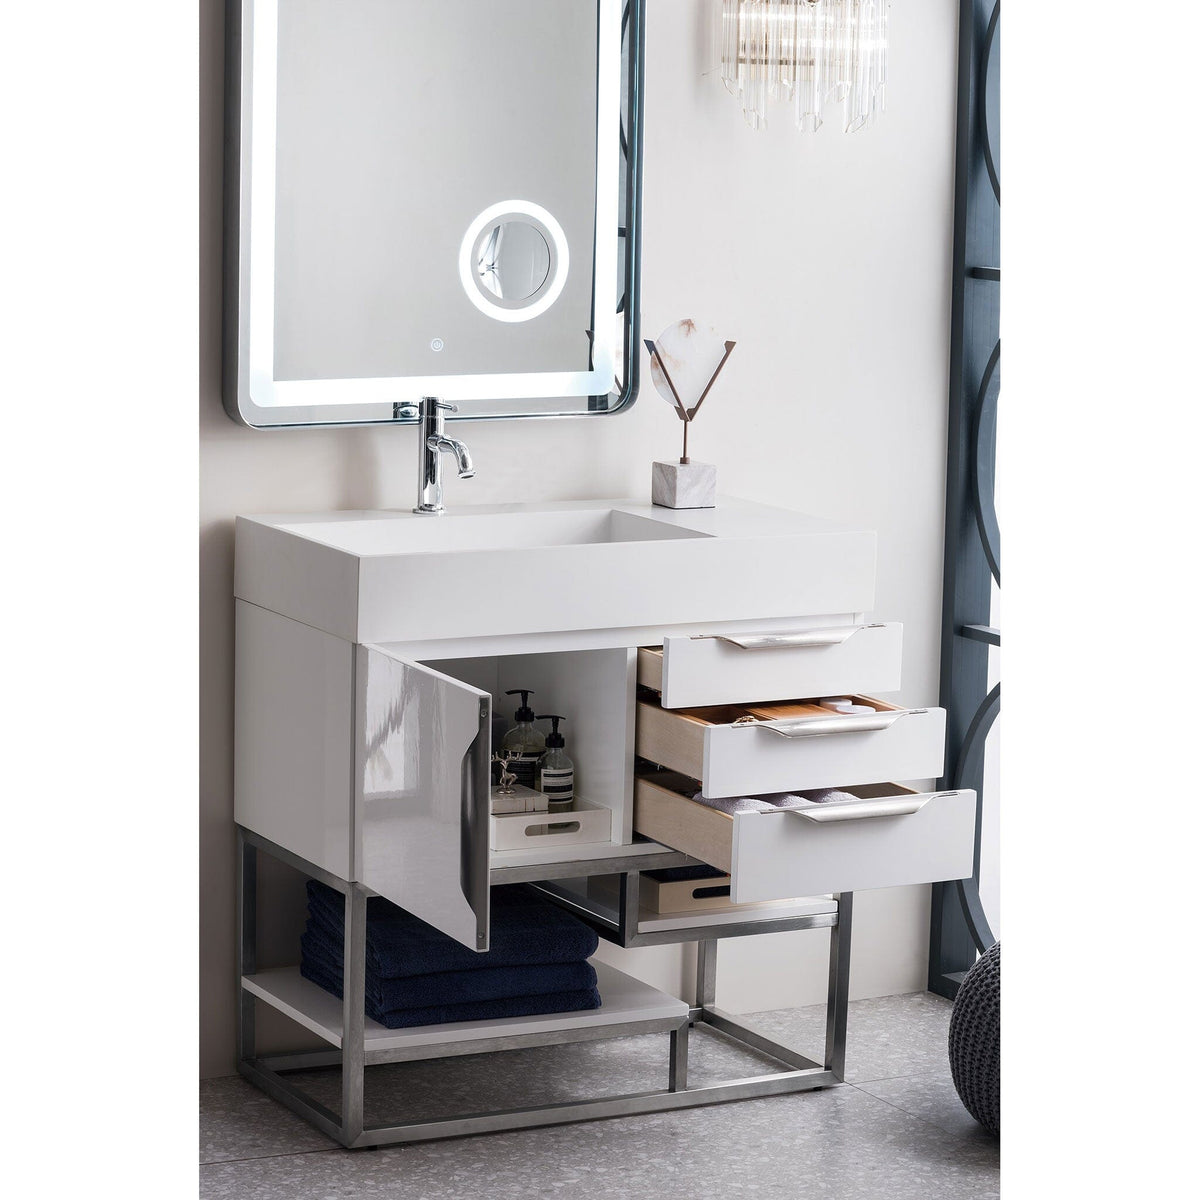 36" Columbia Single Bathroom Vanity, Glossy White w/ Brushed Nickel Base